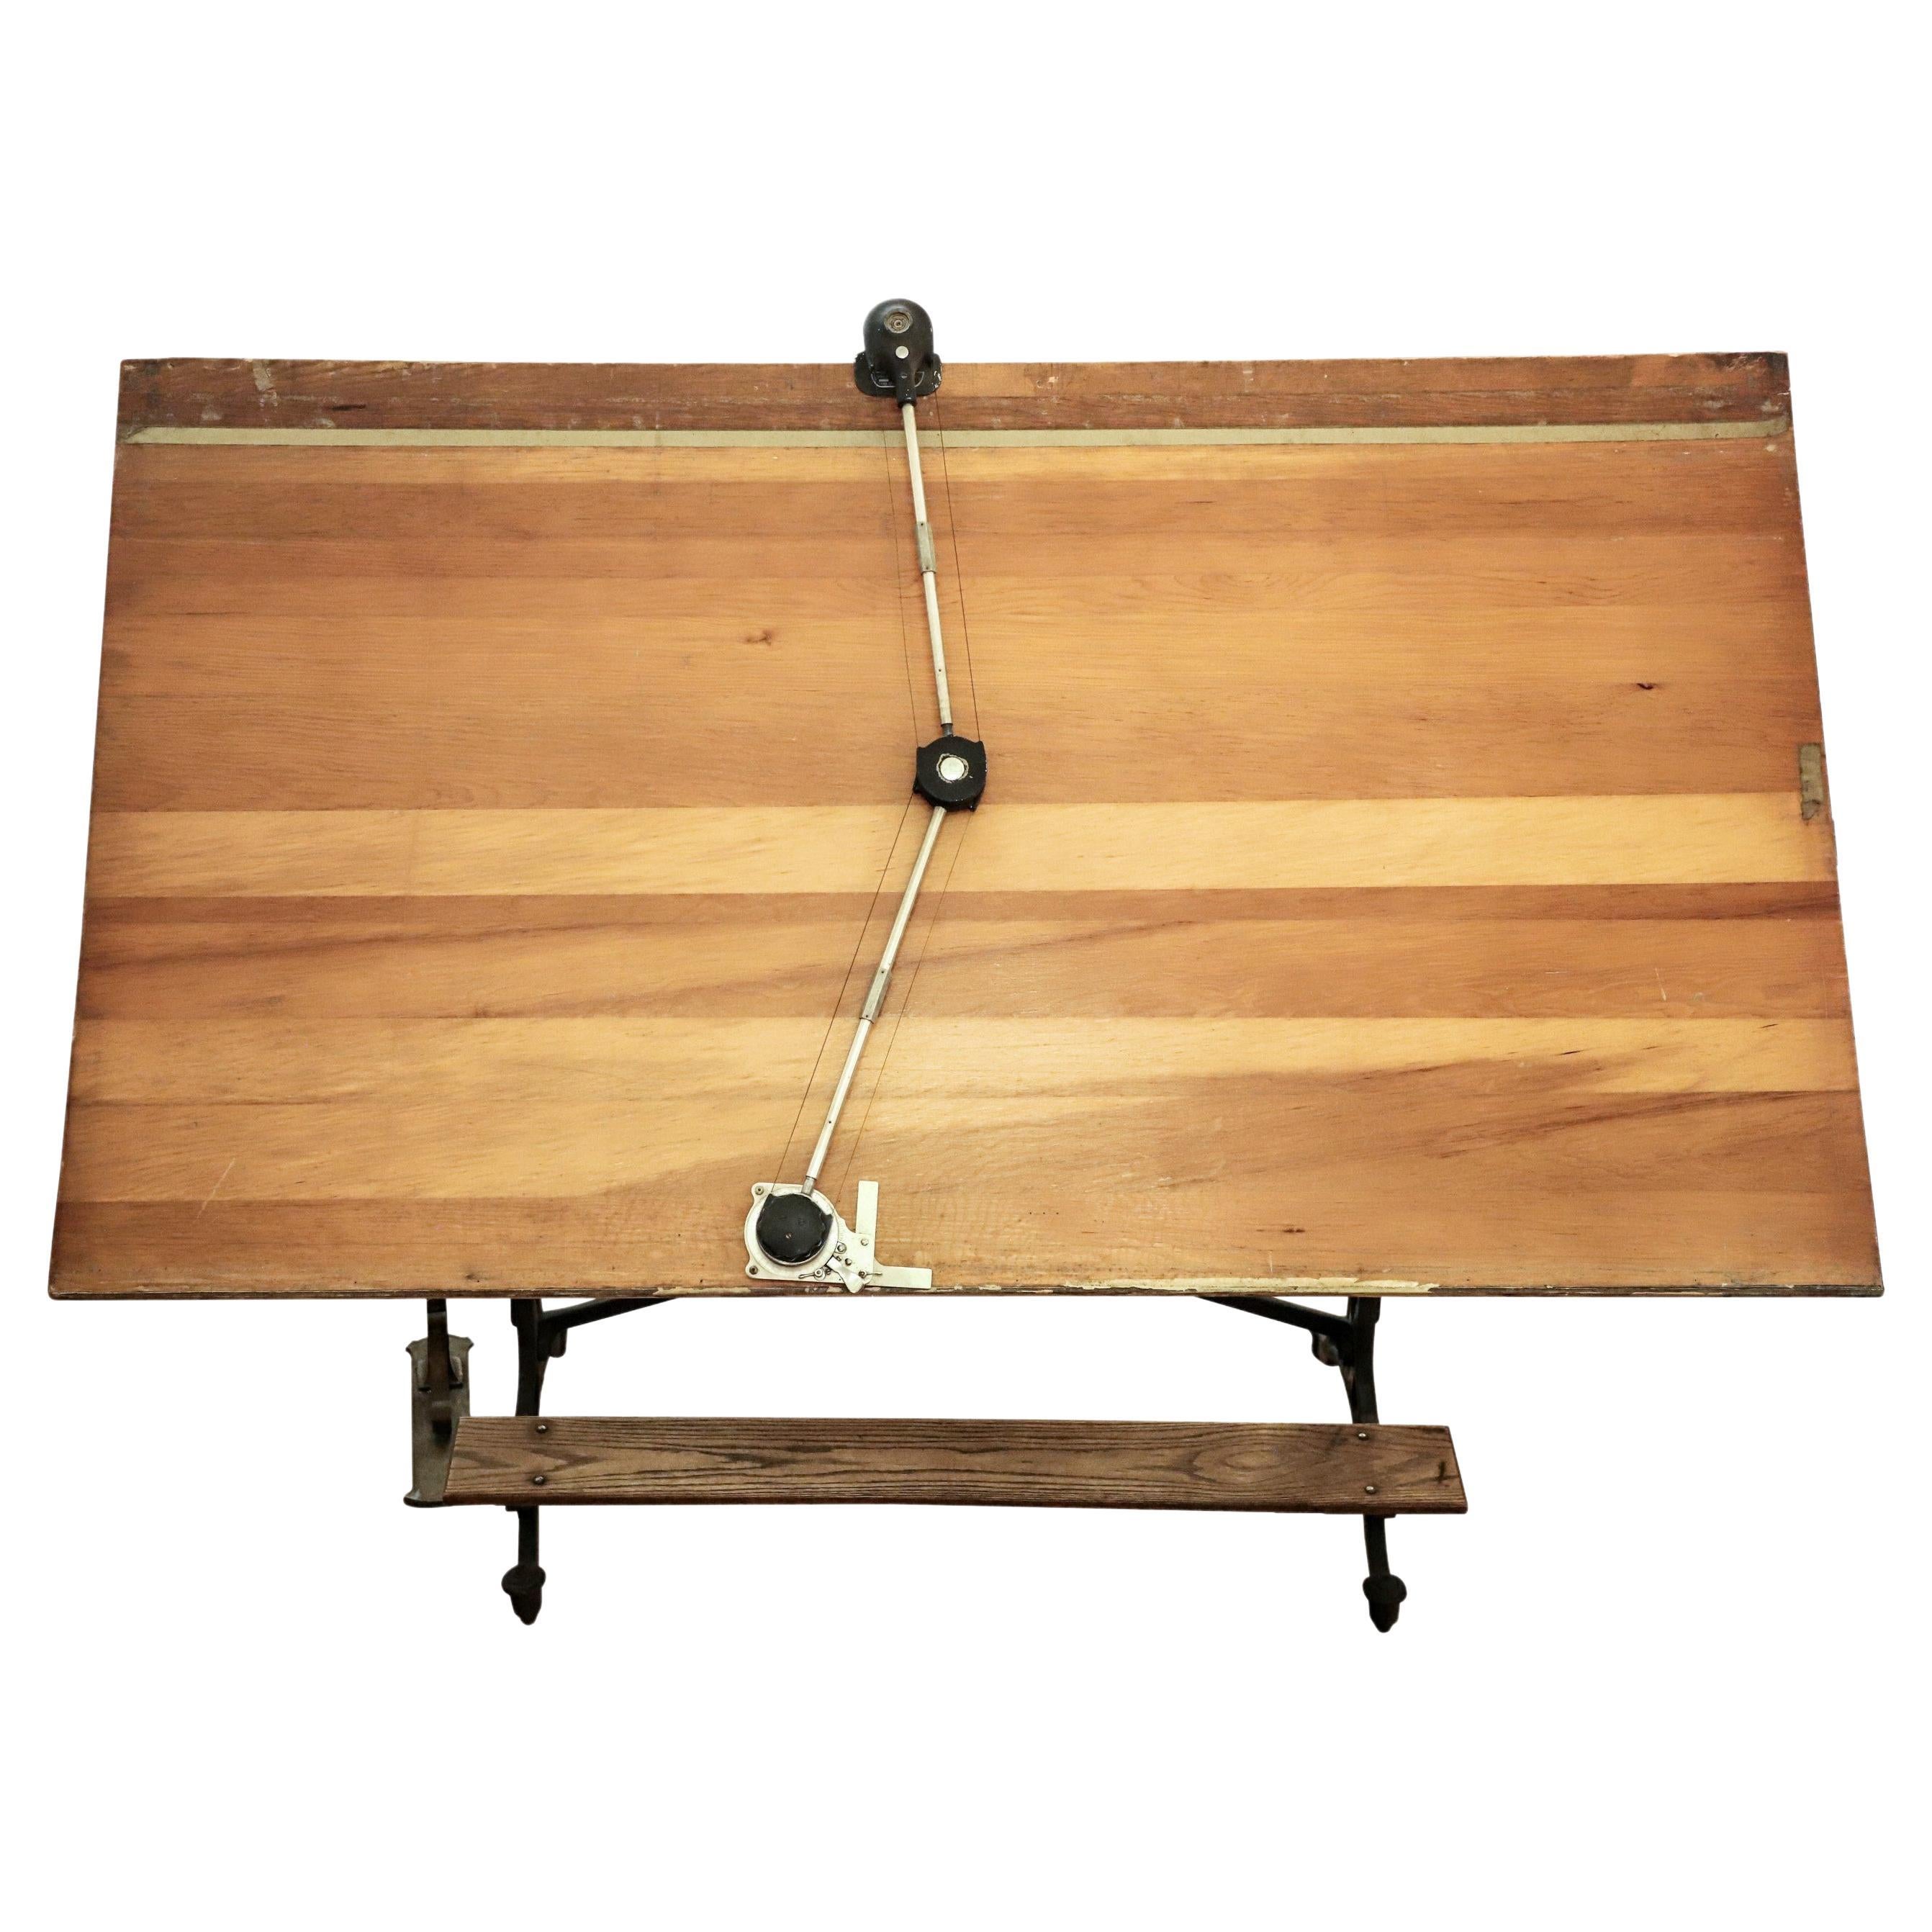 Large Wood Drafting Table Adjust Wheel Cast Iron Base